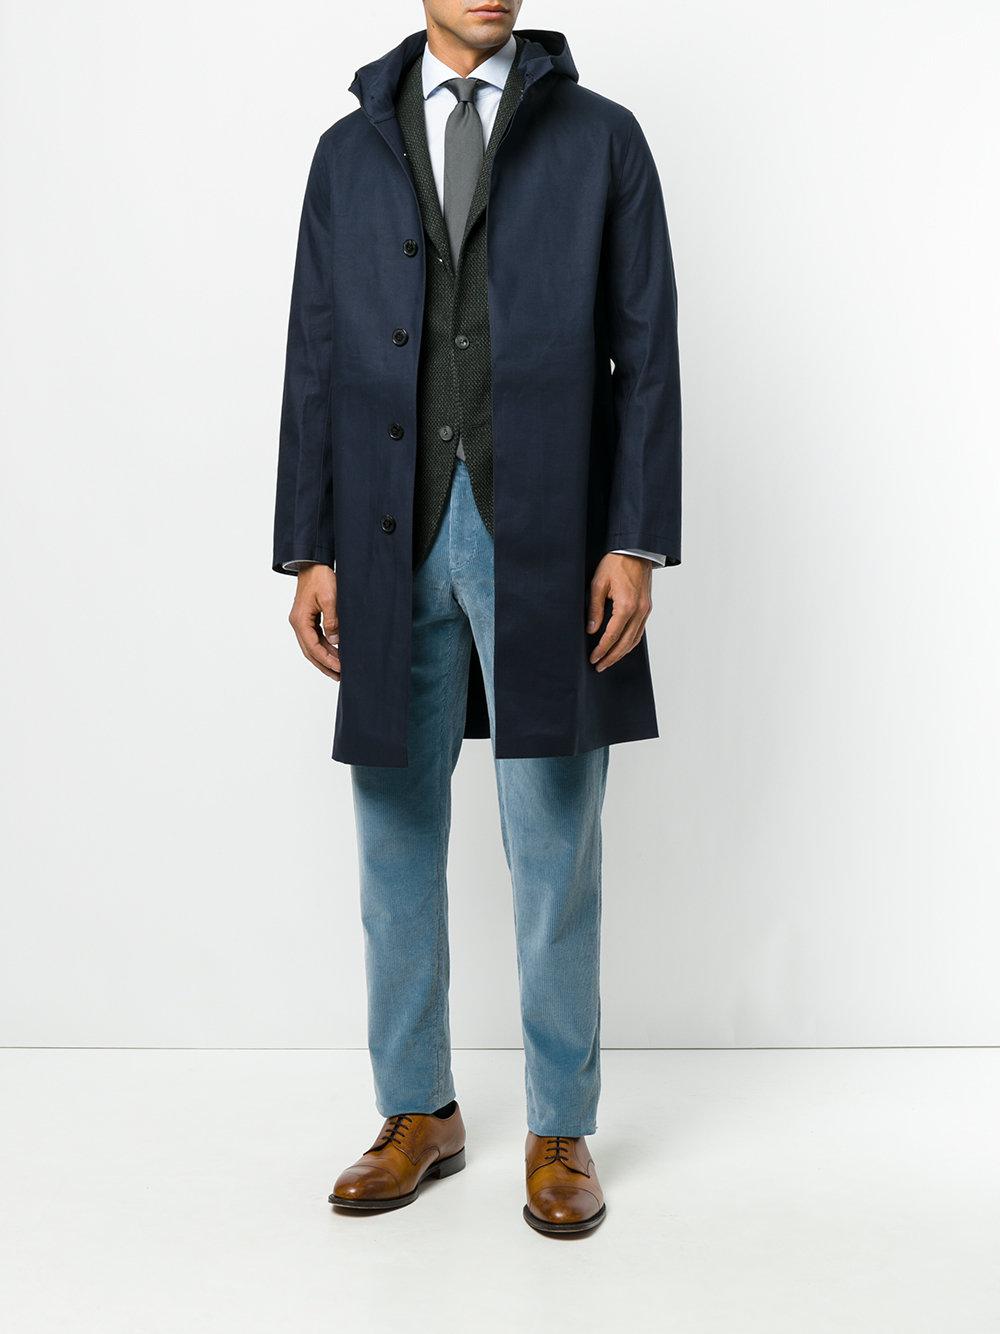 Lyst - Mackintosh Hooded Raincoat in Blue for Men